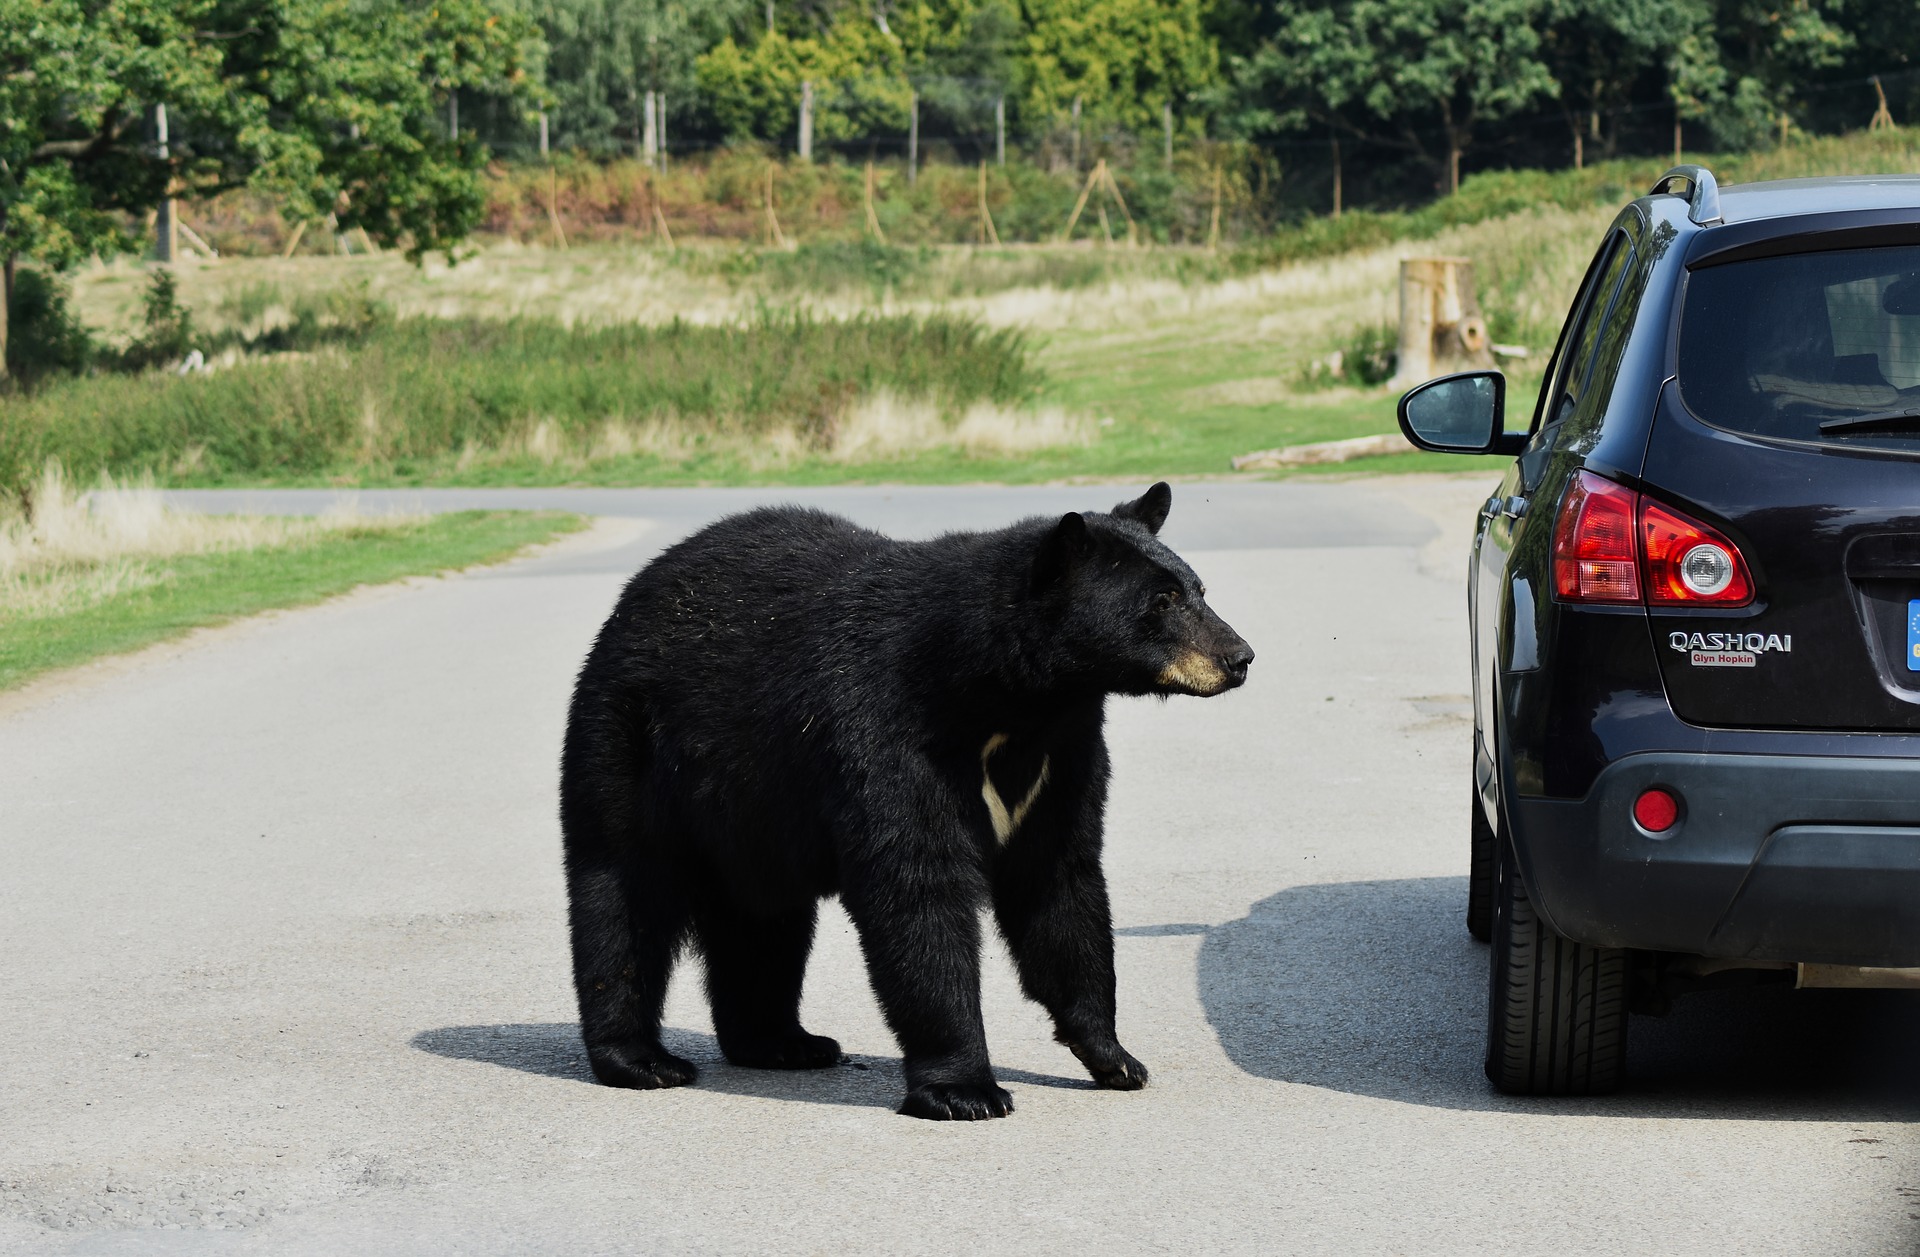 bear next to a car